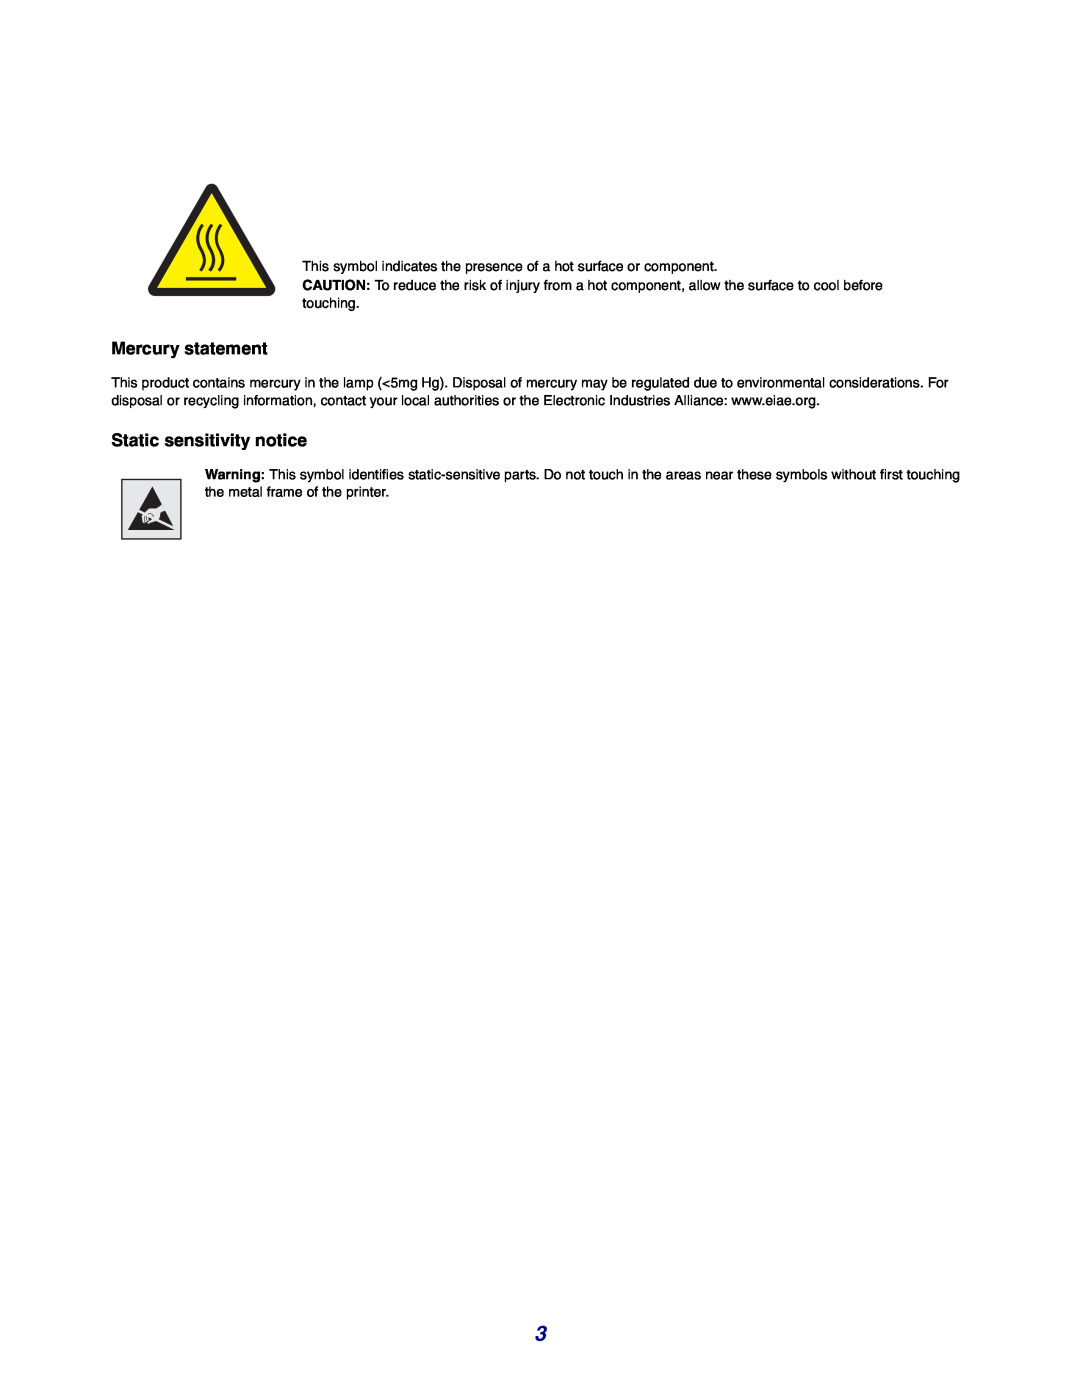 Lexmark X642e manual Mercury statement, Static sensitivity notice 